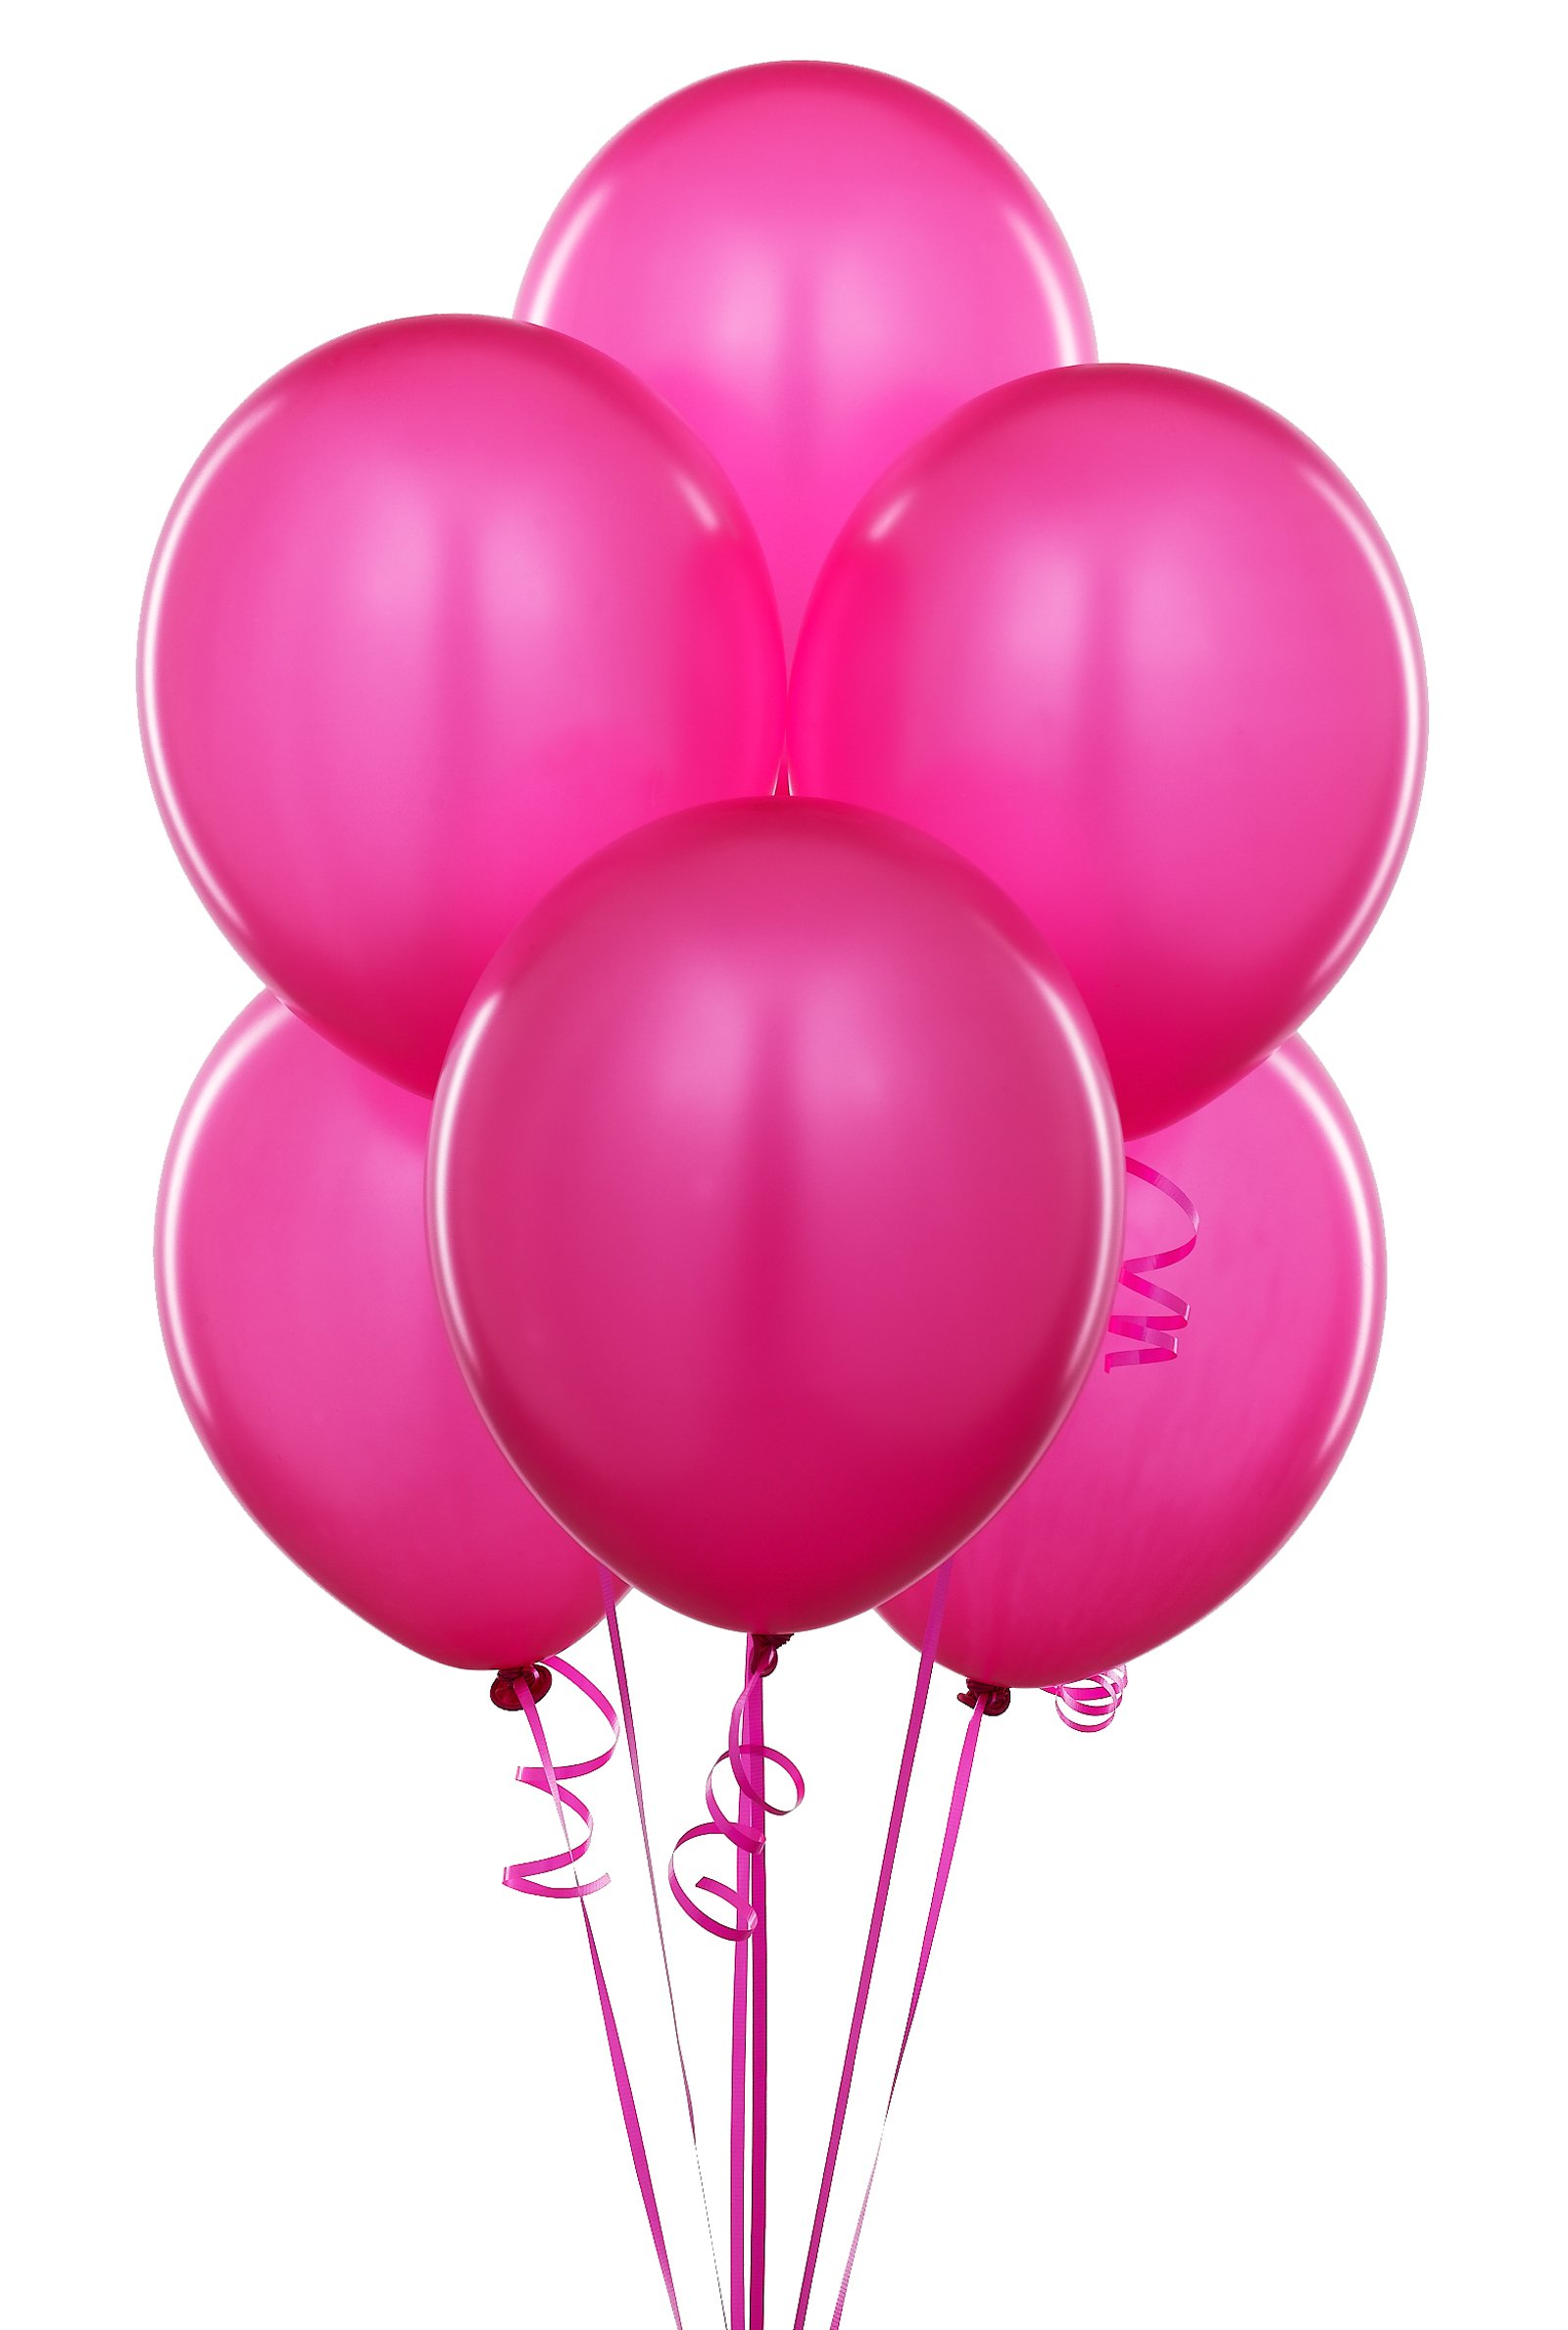 Free Fuschia Balloon Cliparts, Download Free Fuschia Balloon Cliparts